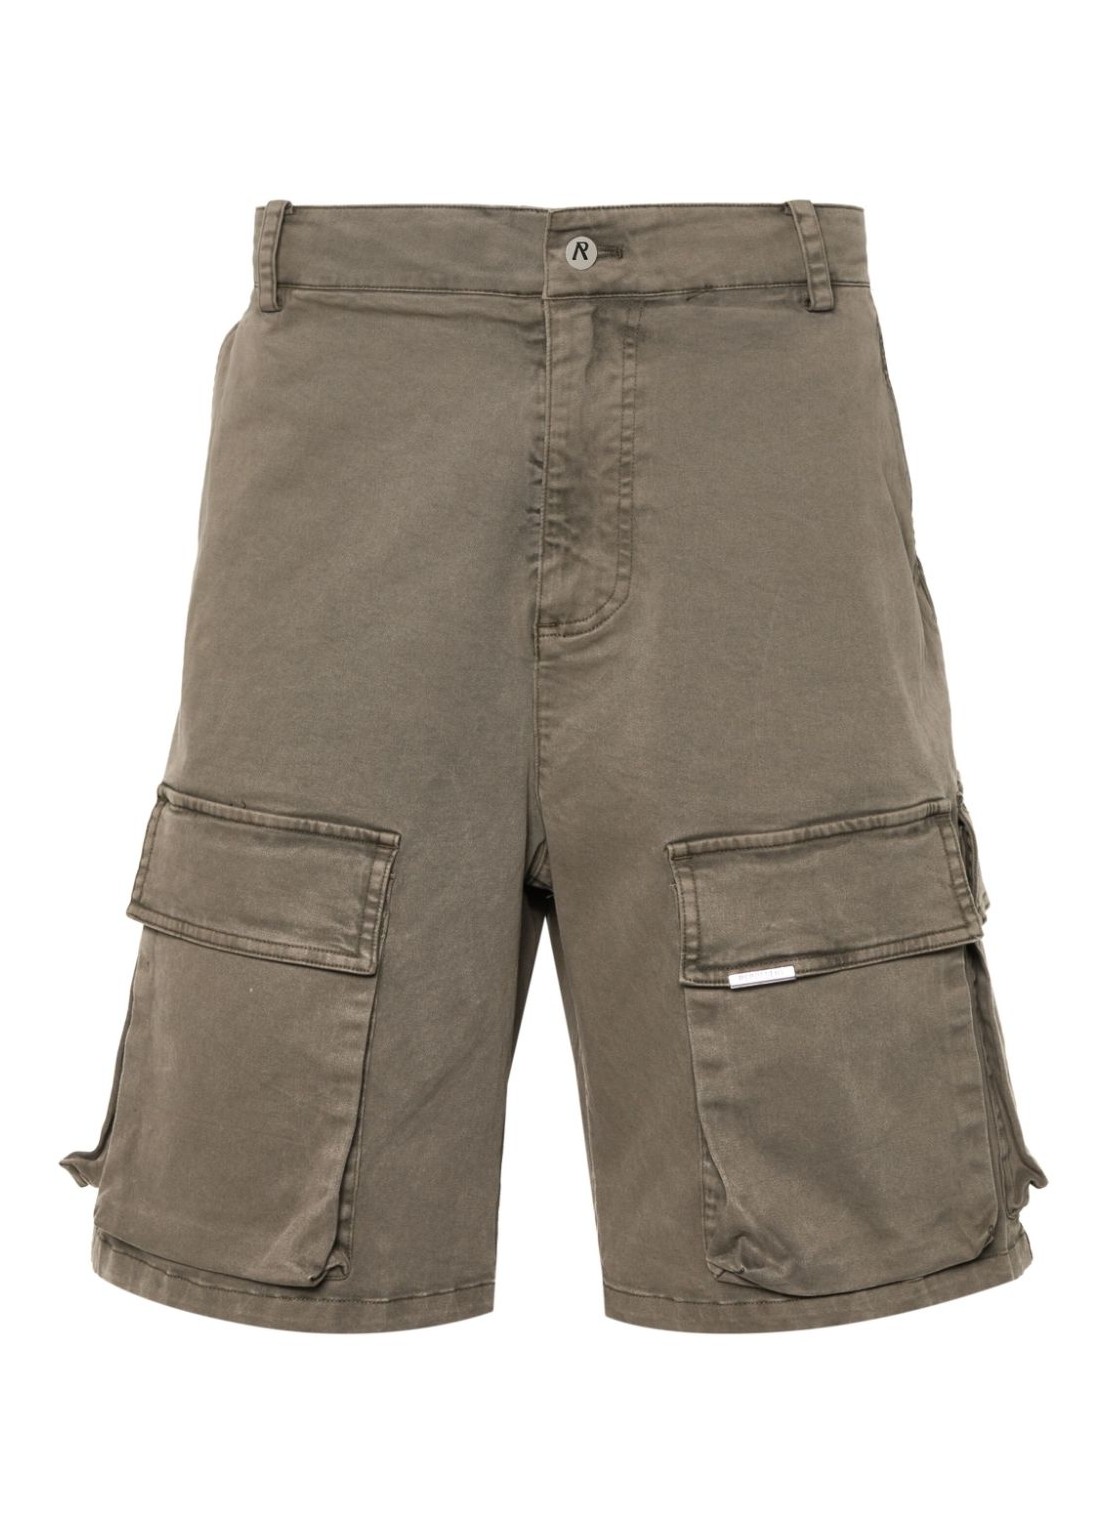 Pantalon corto represent short pant man washed cargo short mlm713 430 talla beige
 